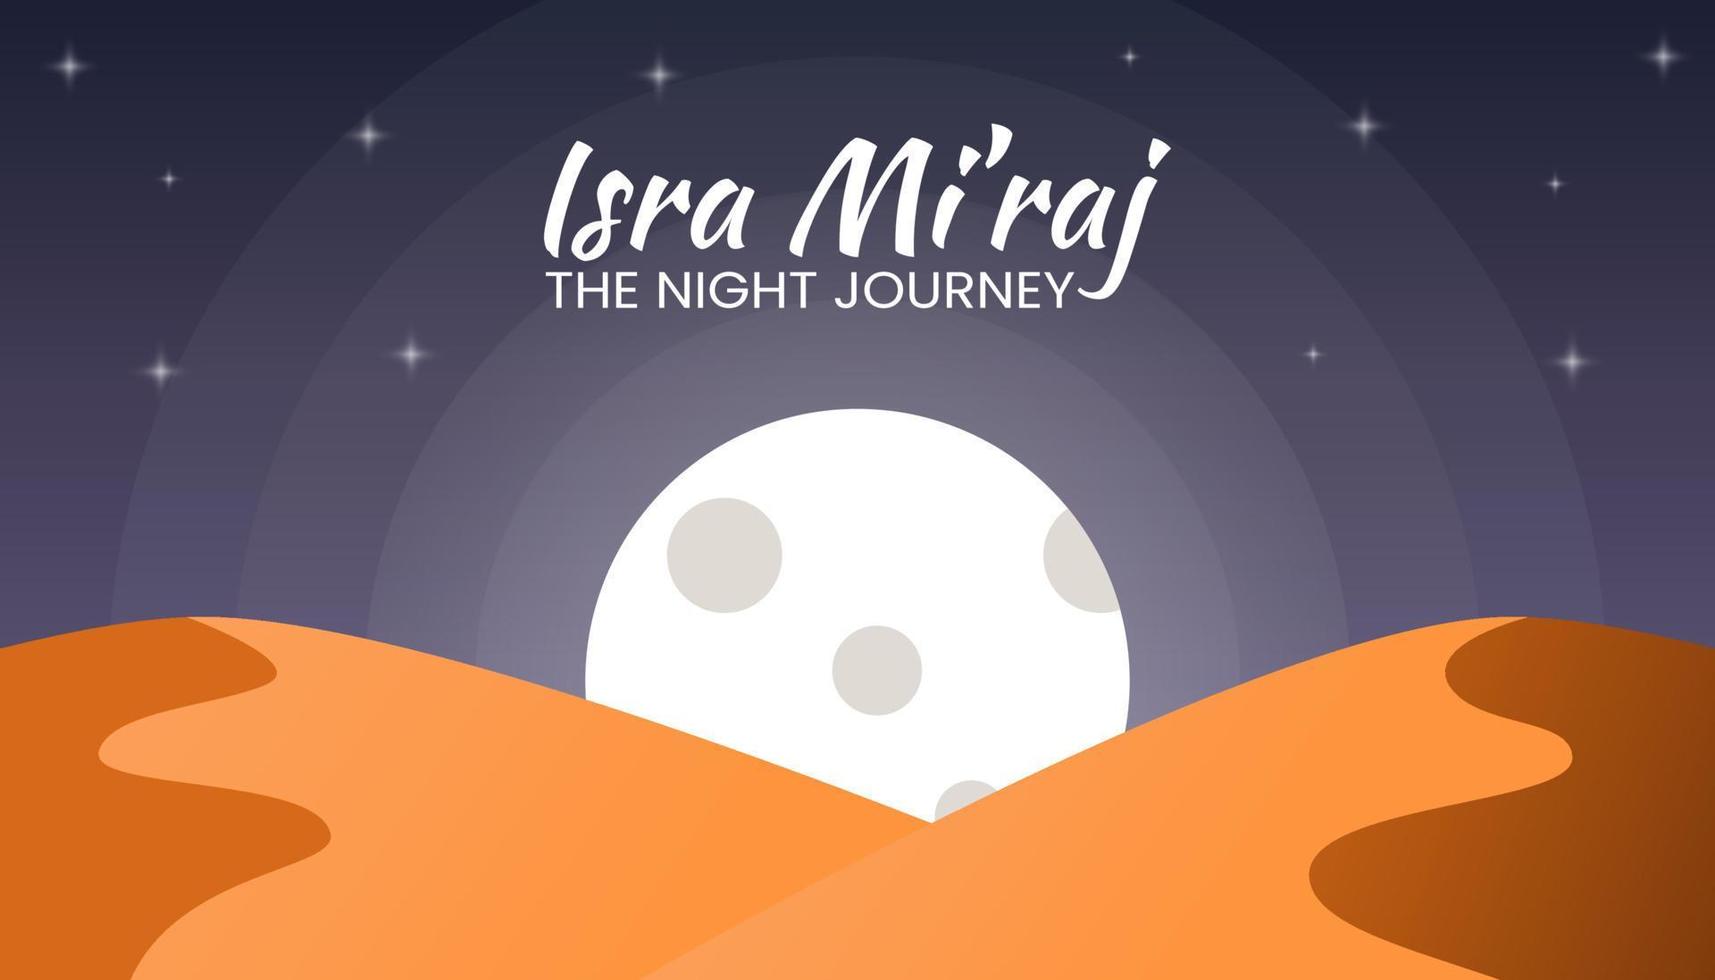 isra mi'raj bedeutet die Nachtreise des Propheten Mohammed vektor